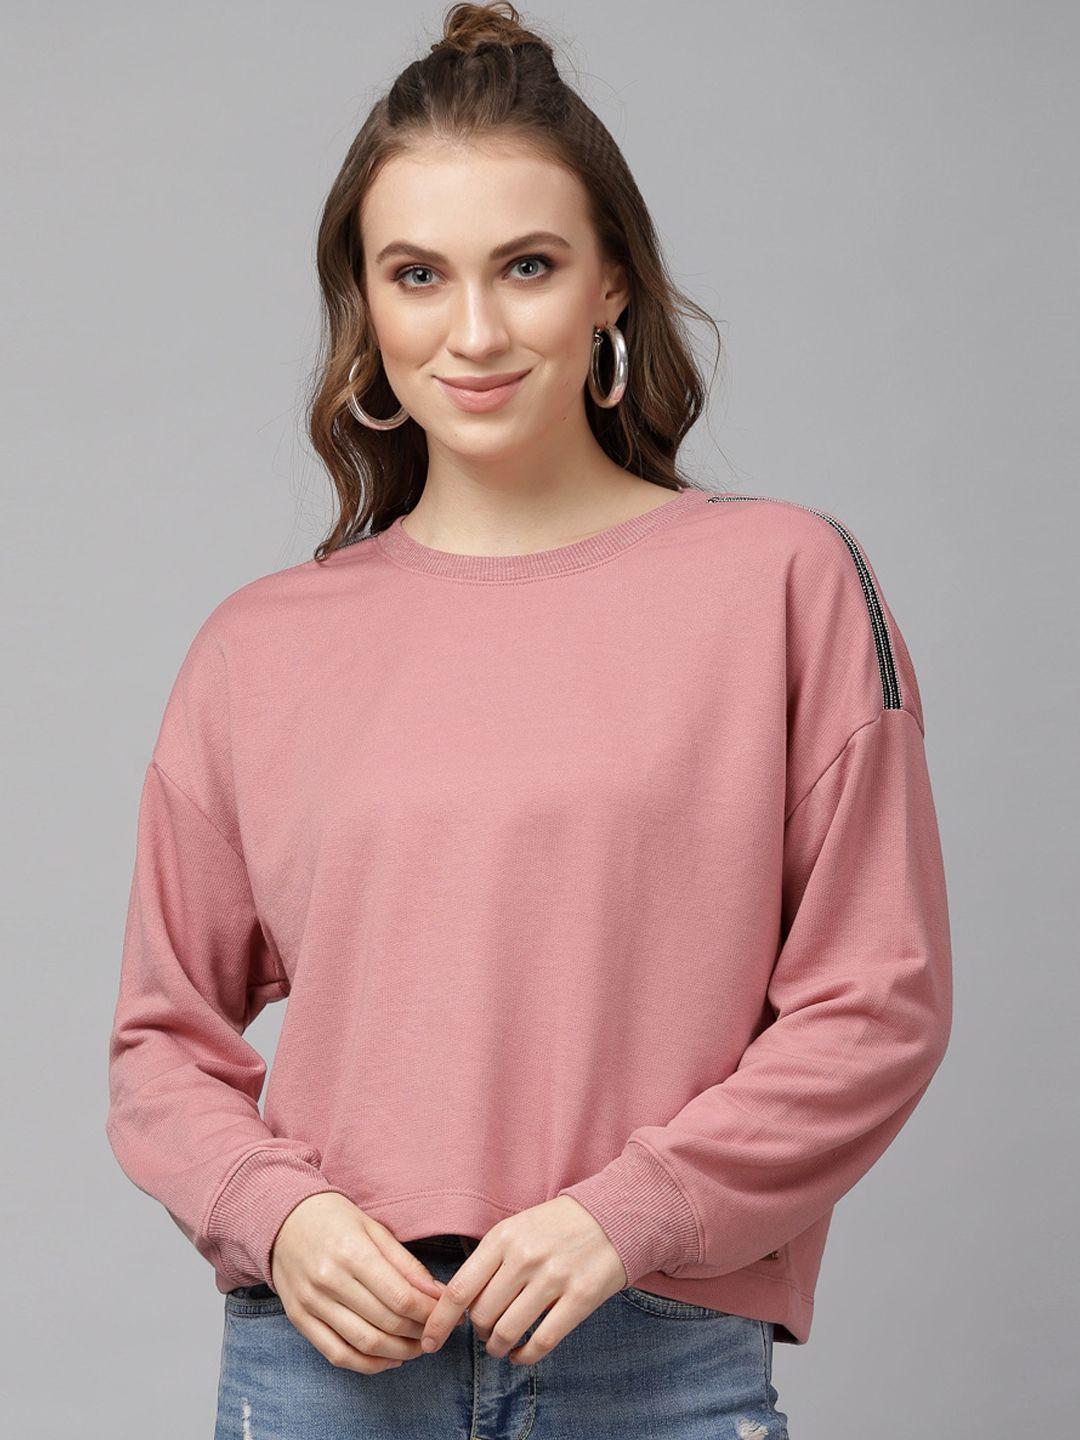 kassually-women-pink-solid-sweatshirt